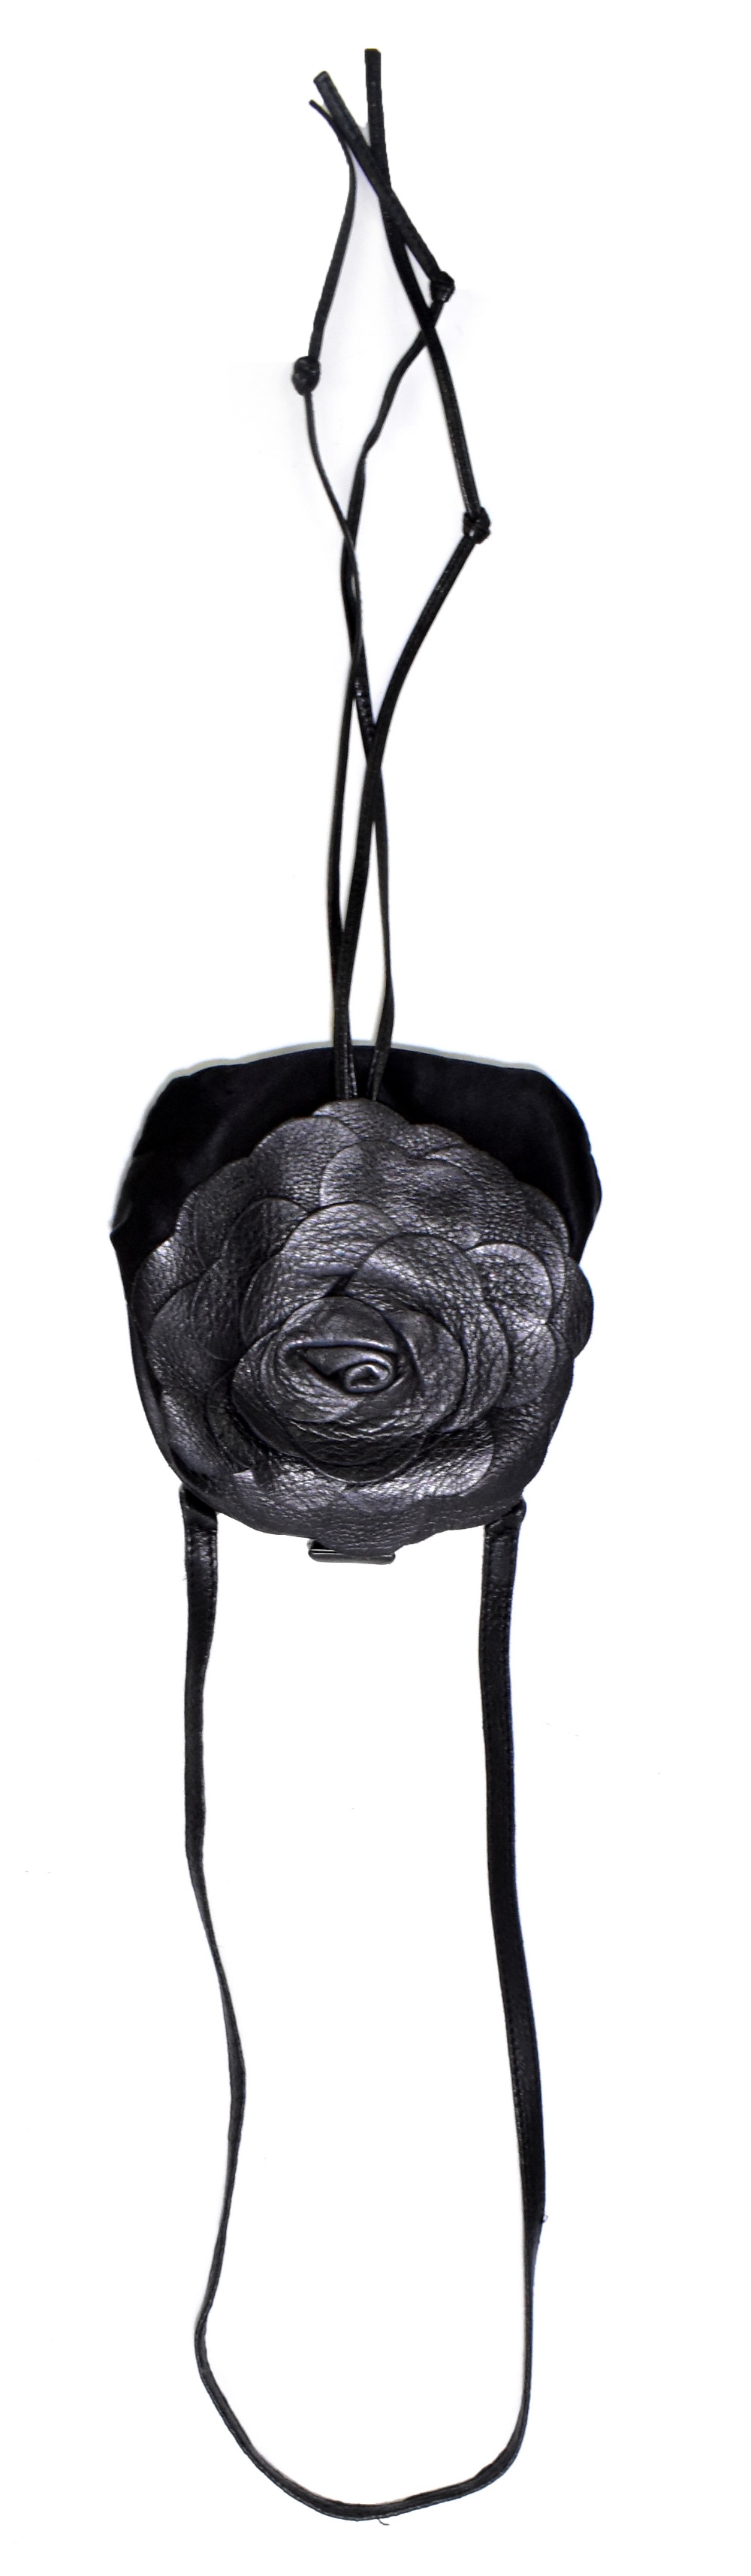 BOTTEGA VENETA; a black leather and satin shoulder bag with leather rose, serial no.108339084, 14